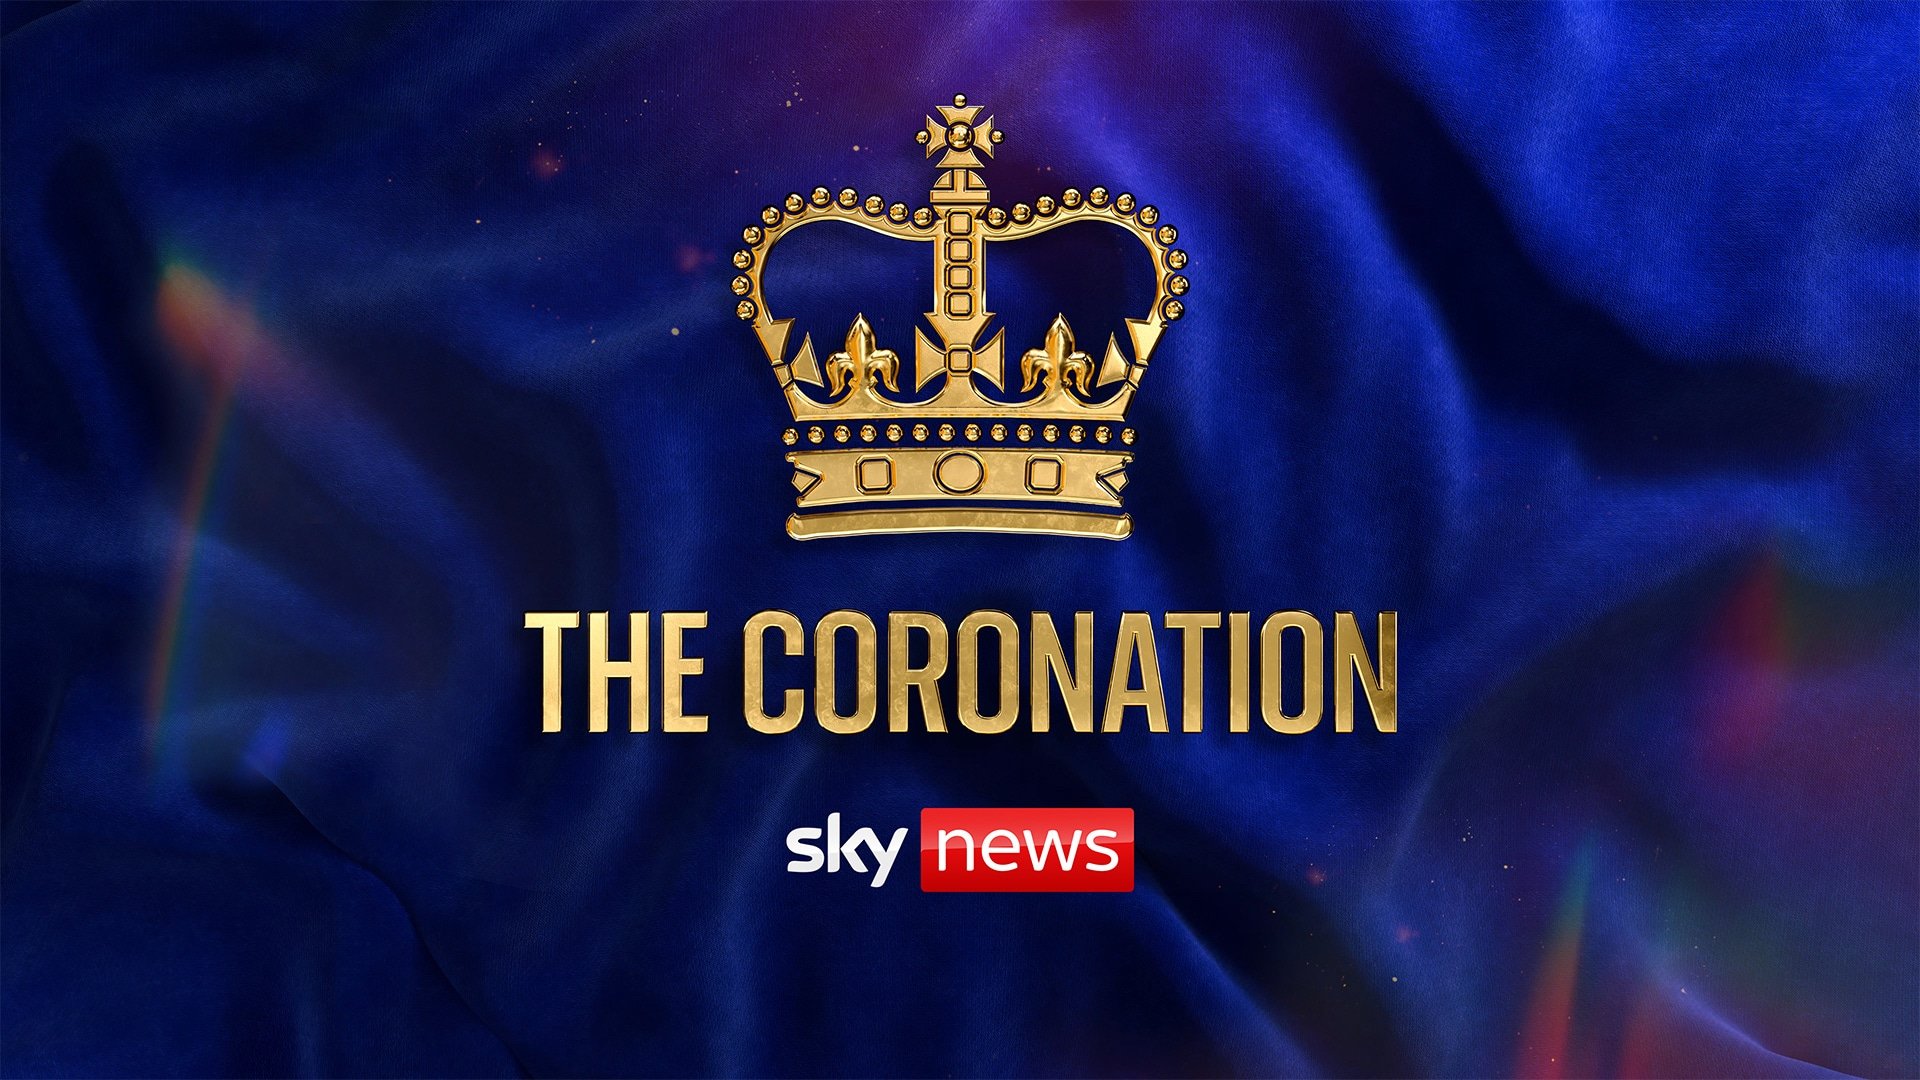 Coronation on Sky News